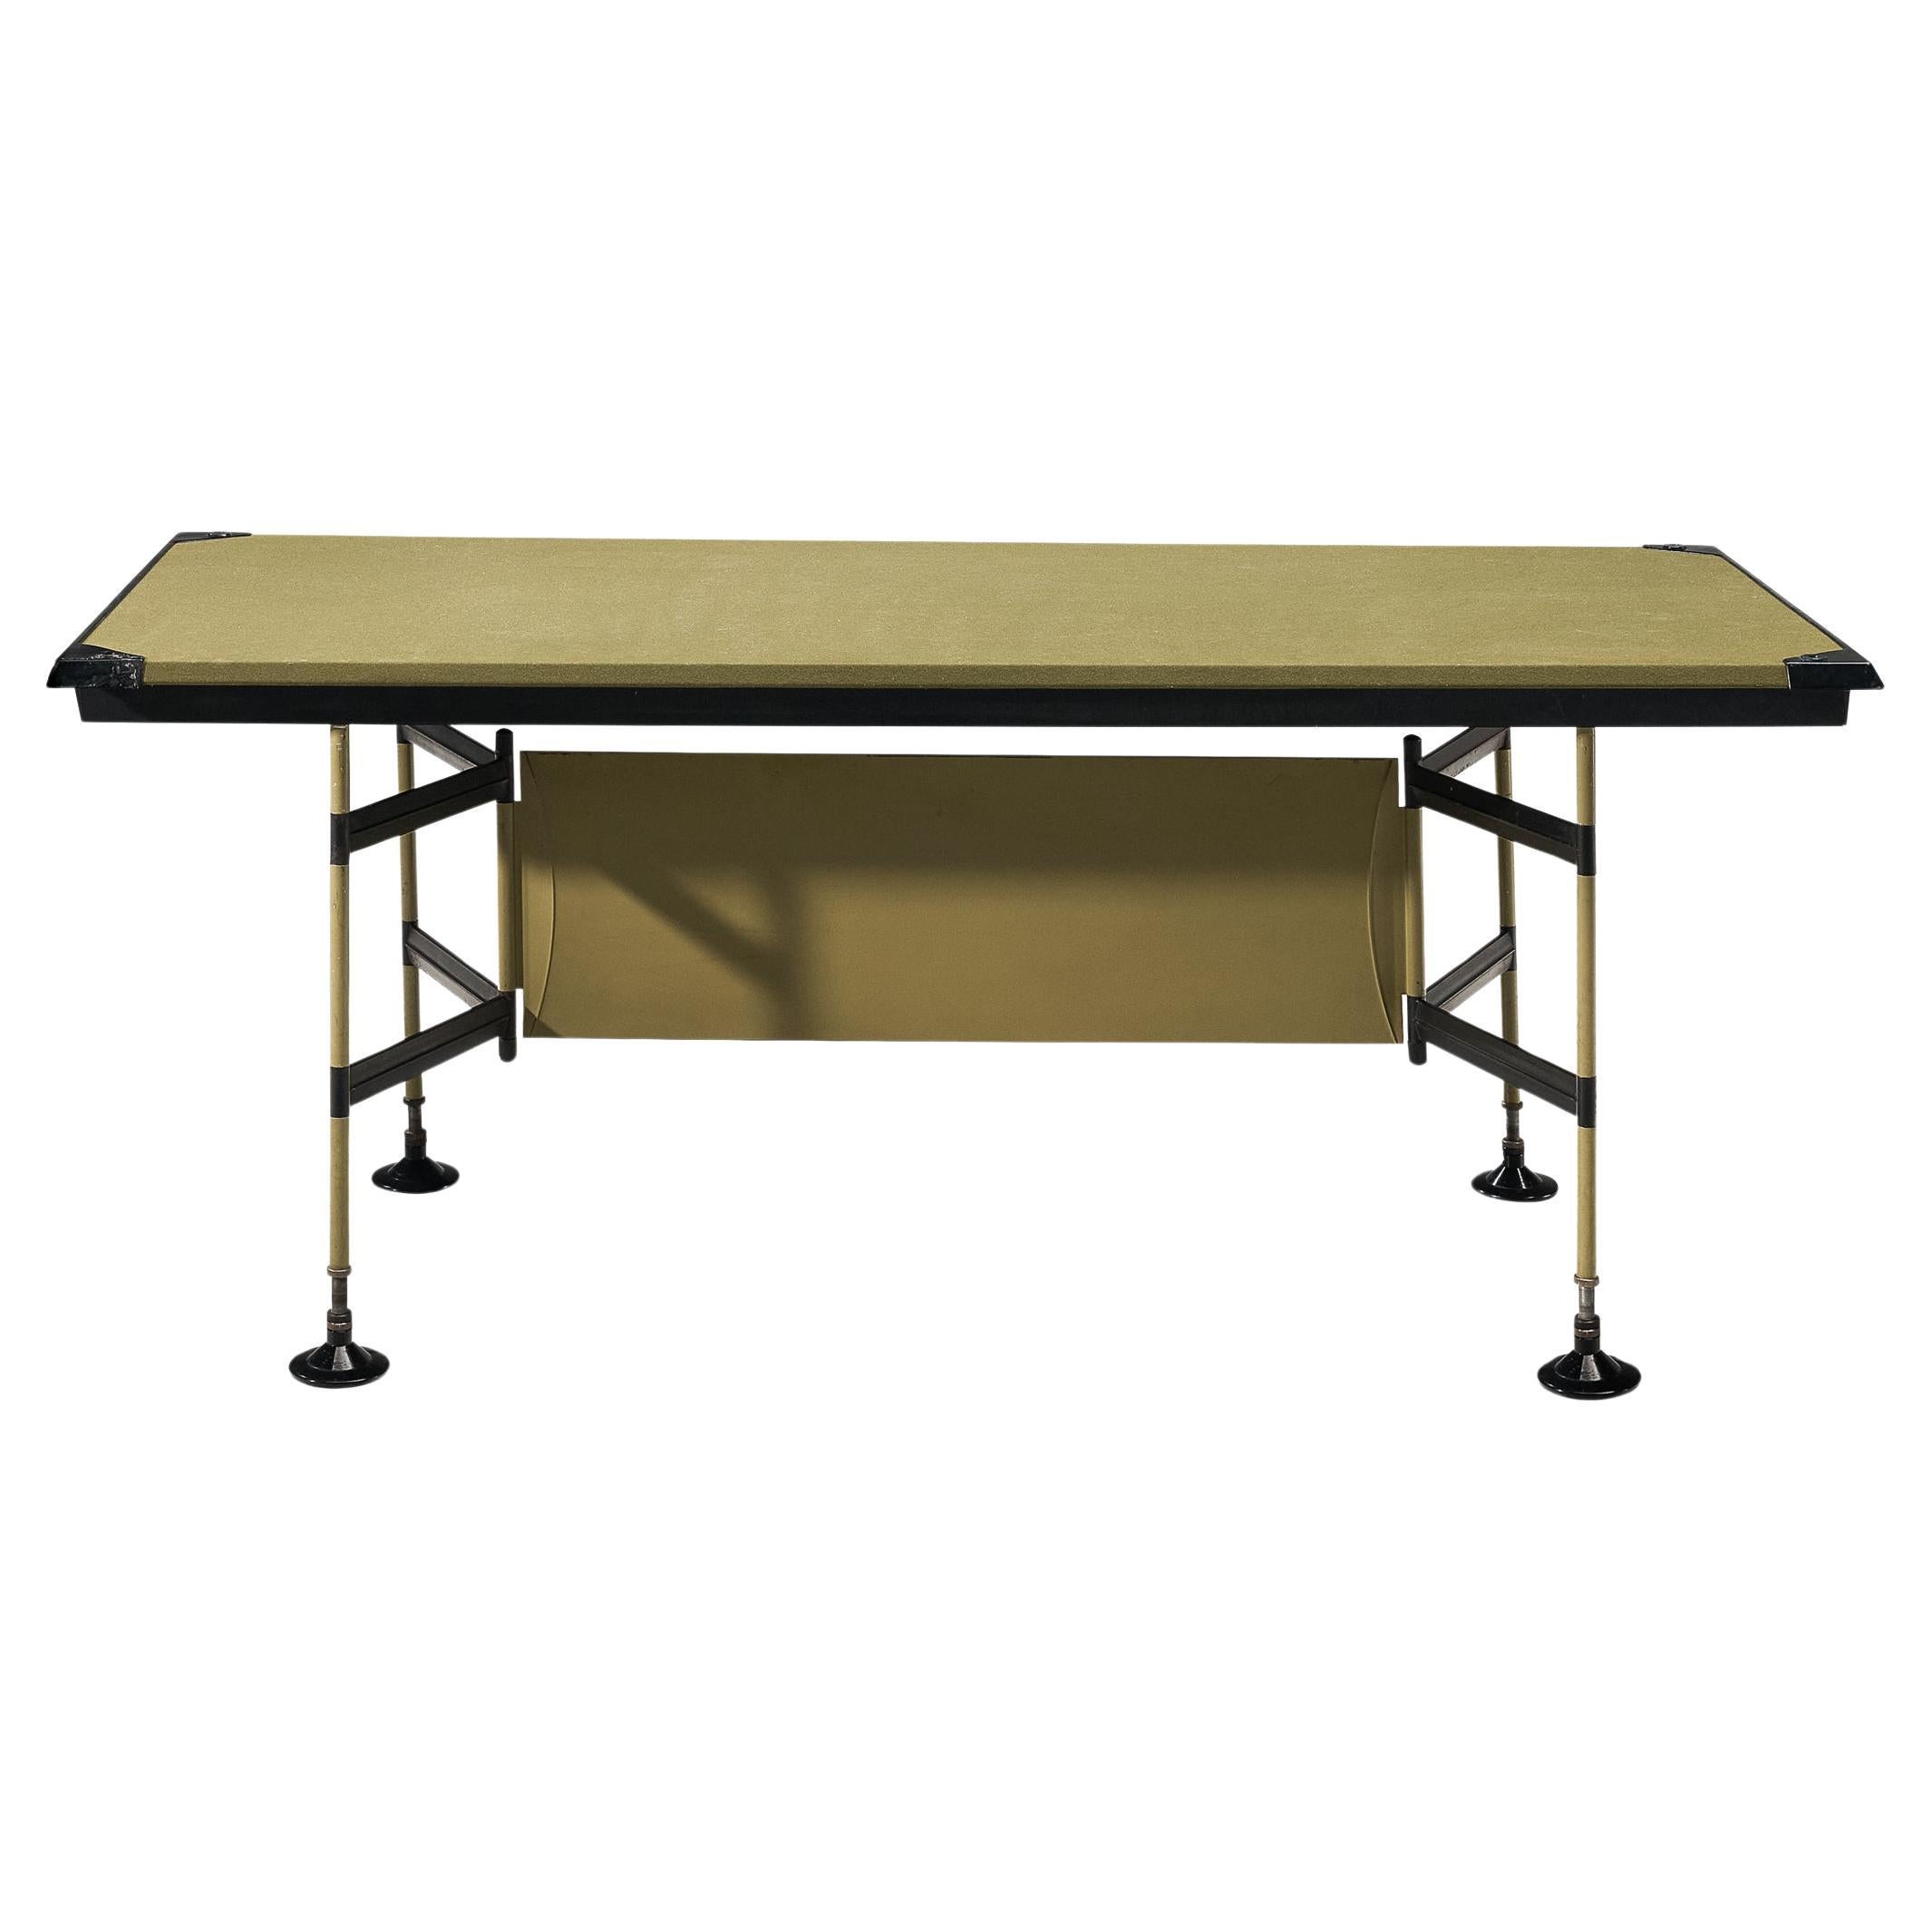 Studio BBPR Versatile ‘Spazio’ Table  For Sale